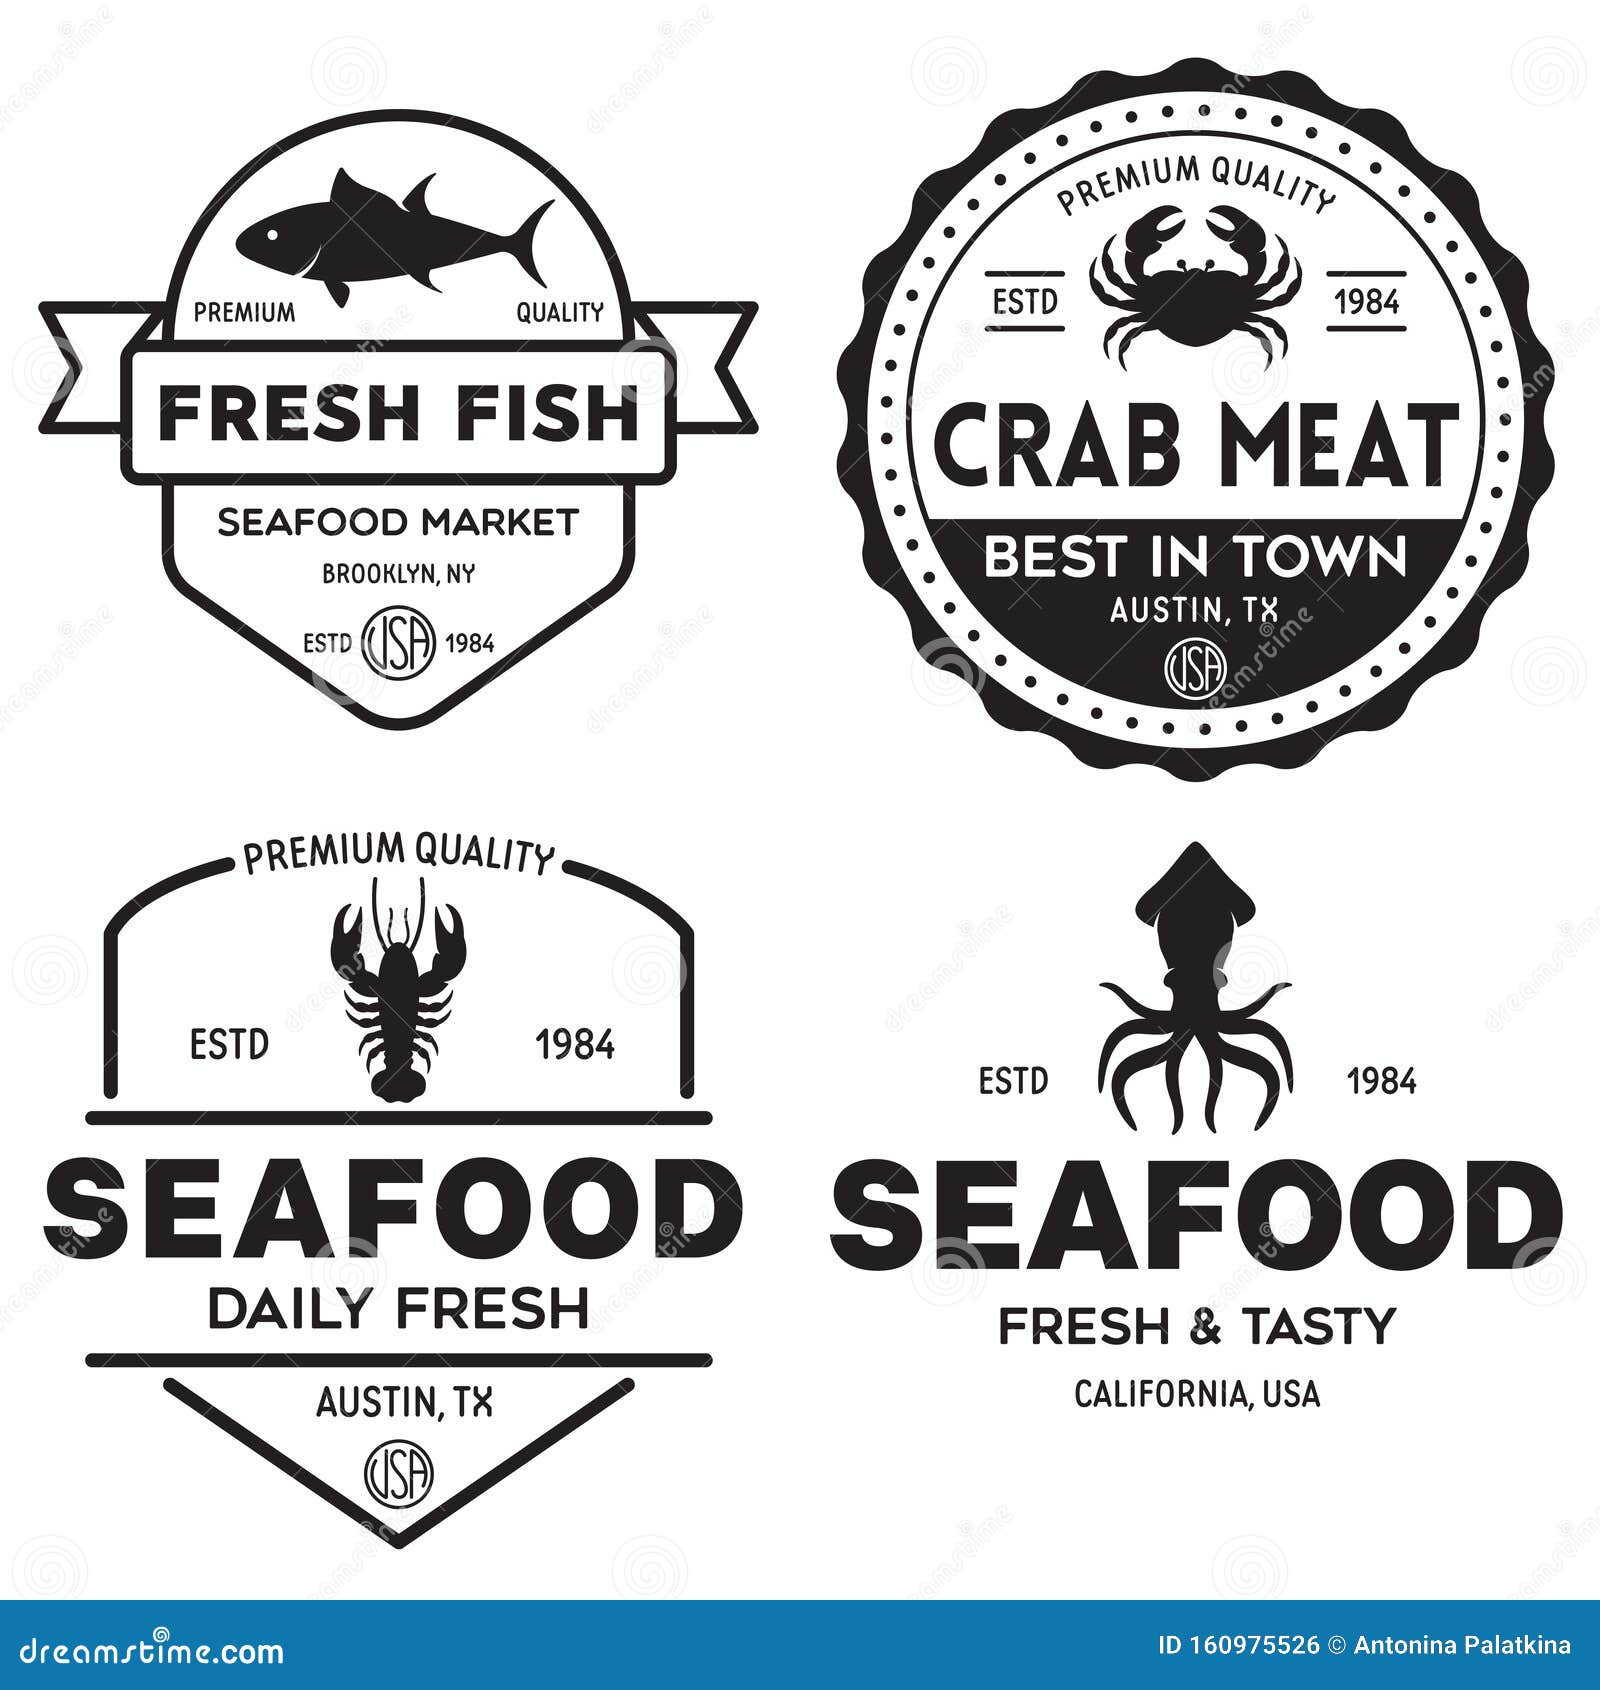 Seafood Restaurant Logos Set Vector Illustration Market And